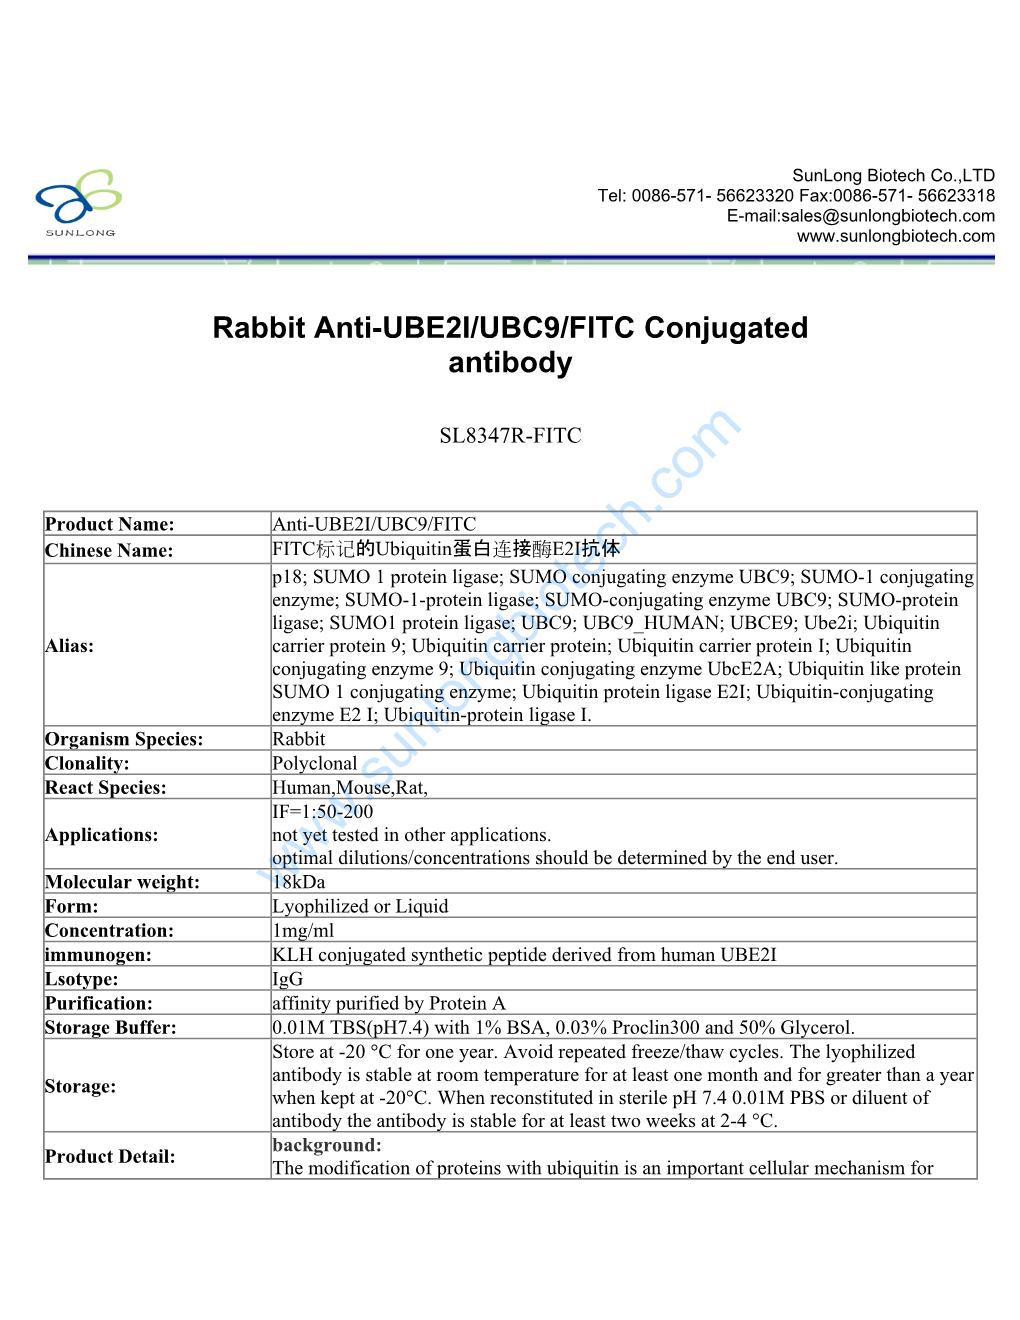 Rabbit Anti-UBE2I/UBC9/FITC Conjugated Antibody-SL8347R-FITC